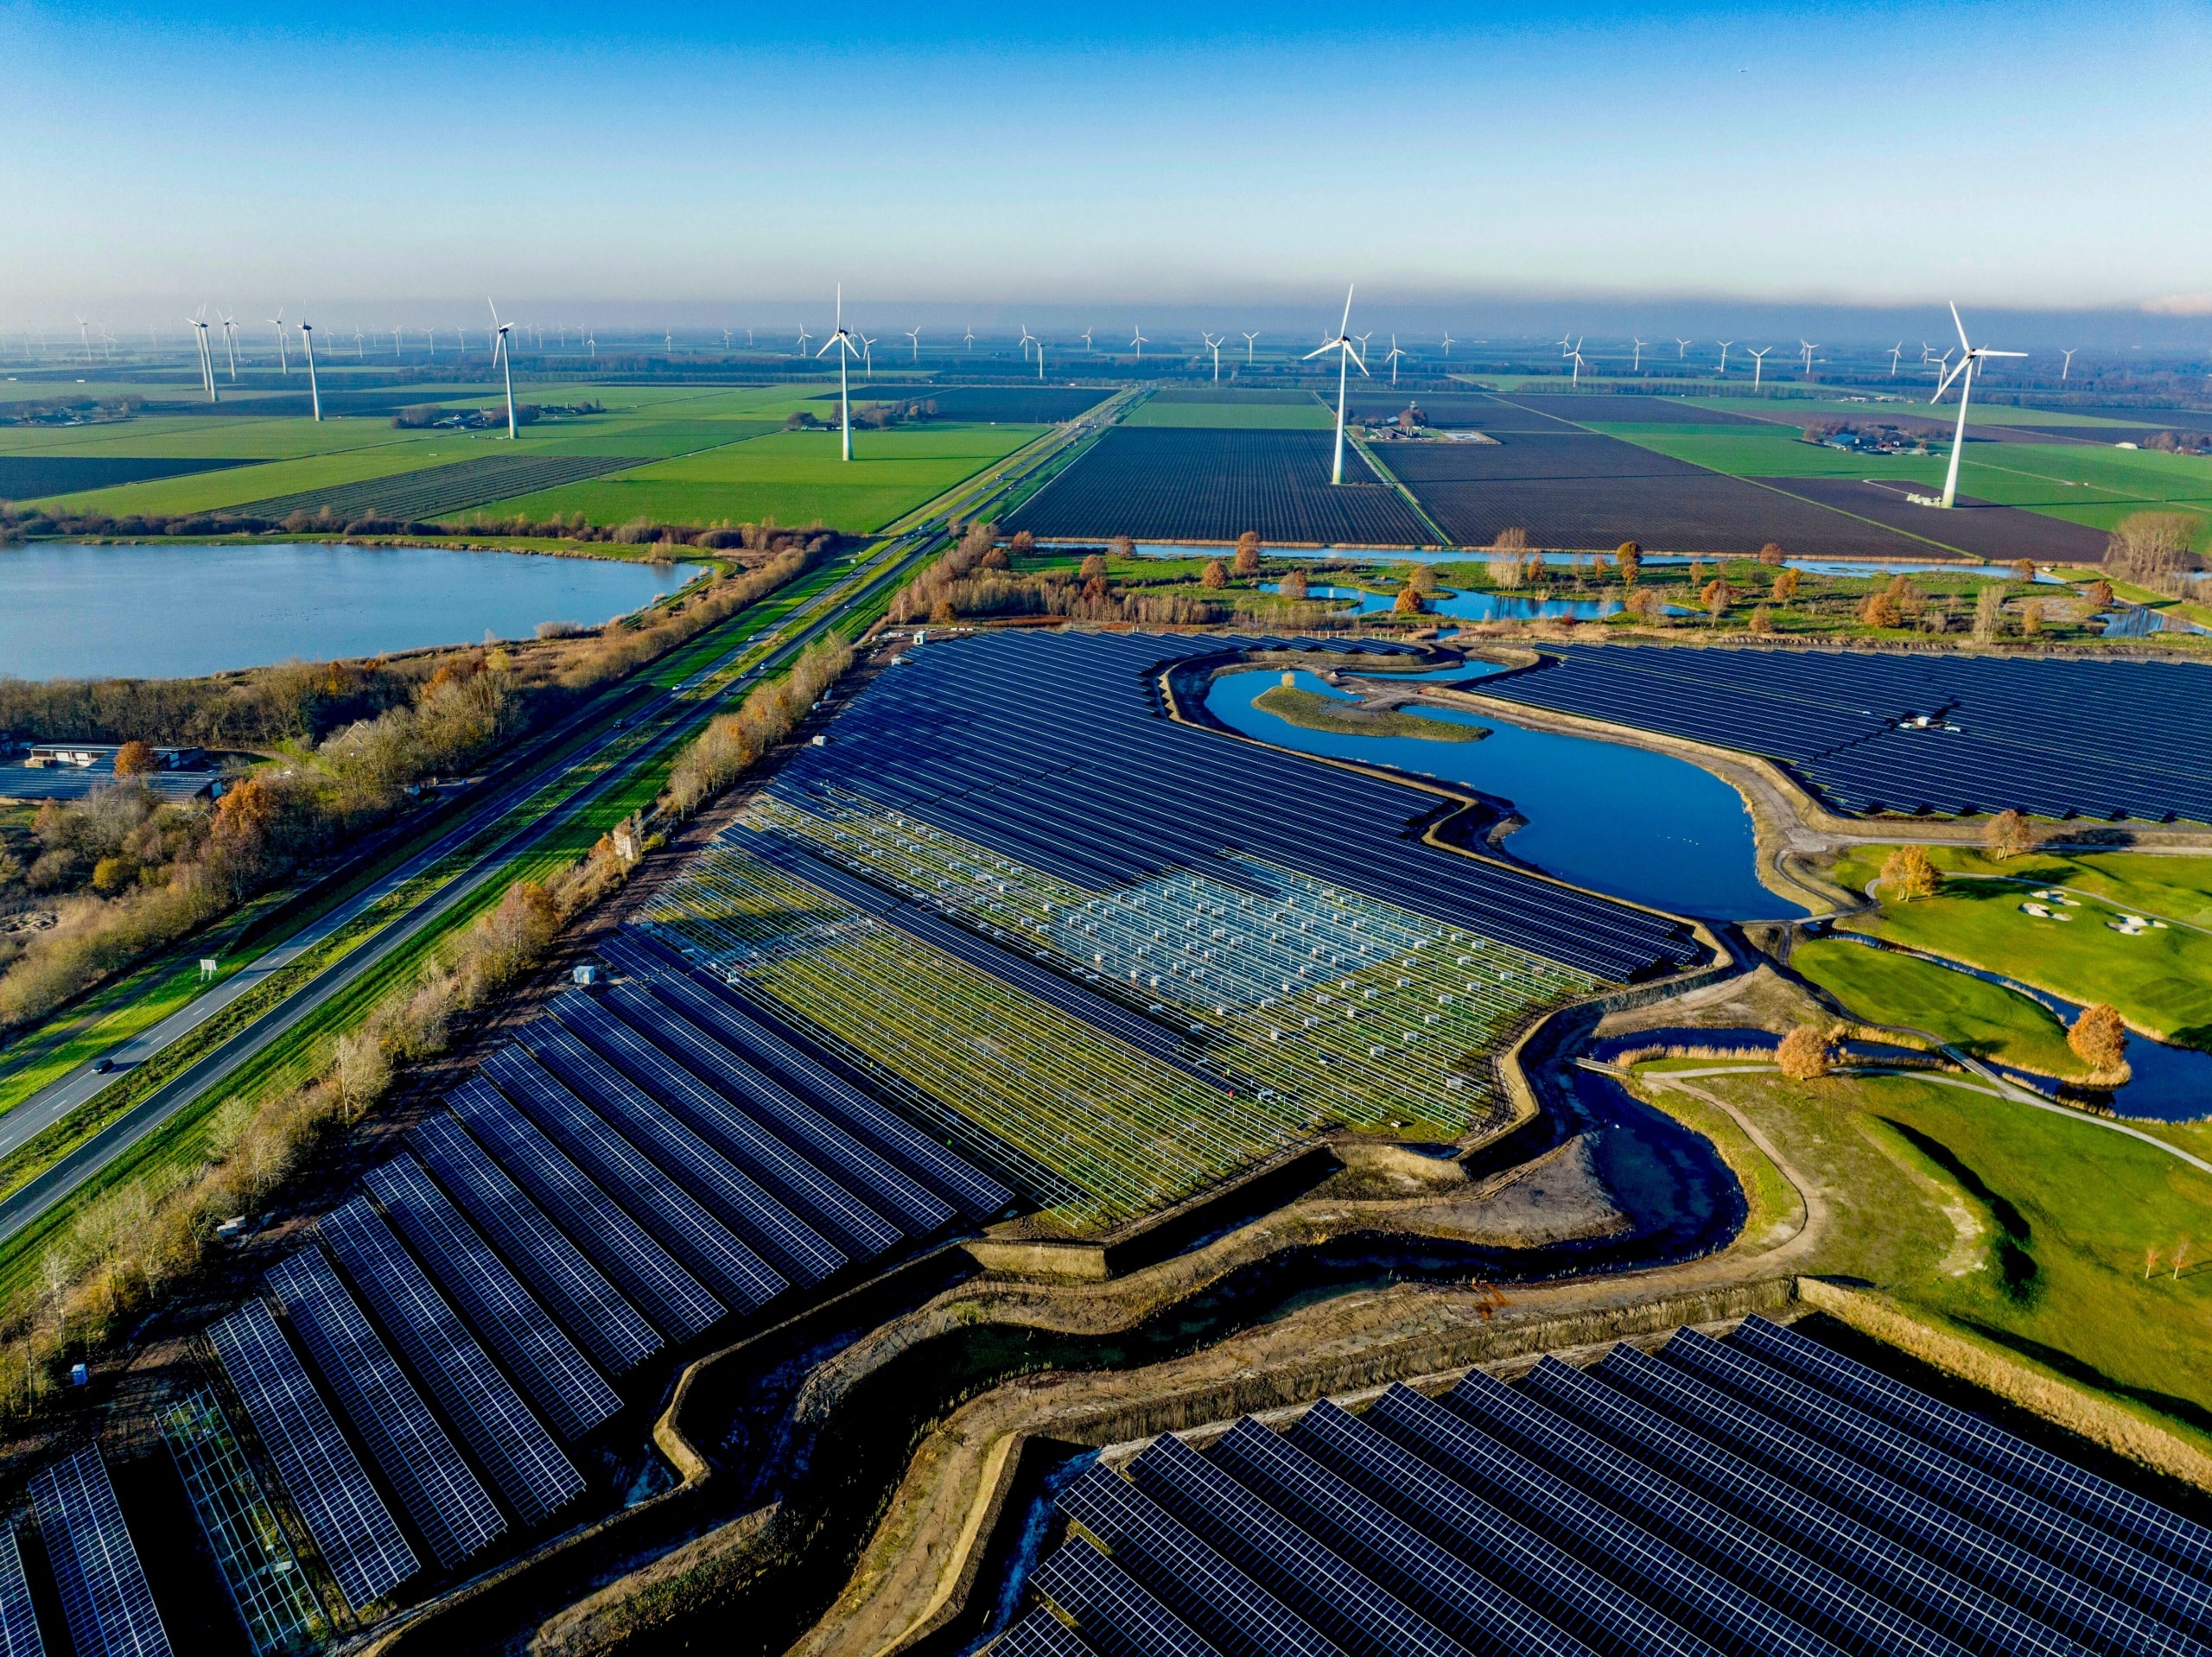 Aerial view of a sprawling solar farm alongside wind turbines in a green landscape